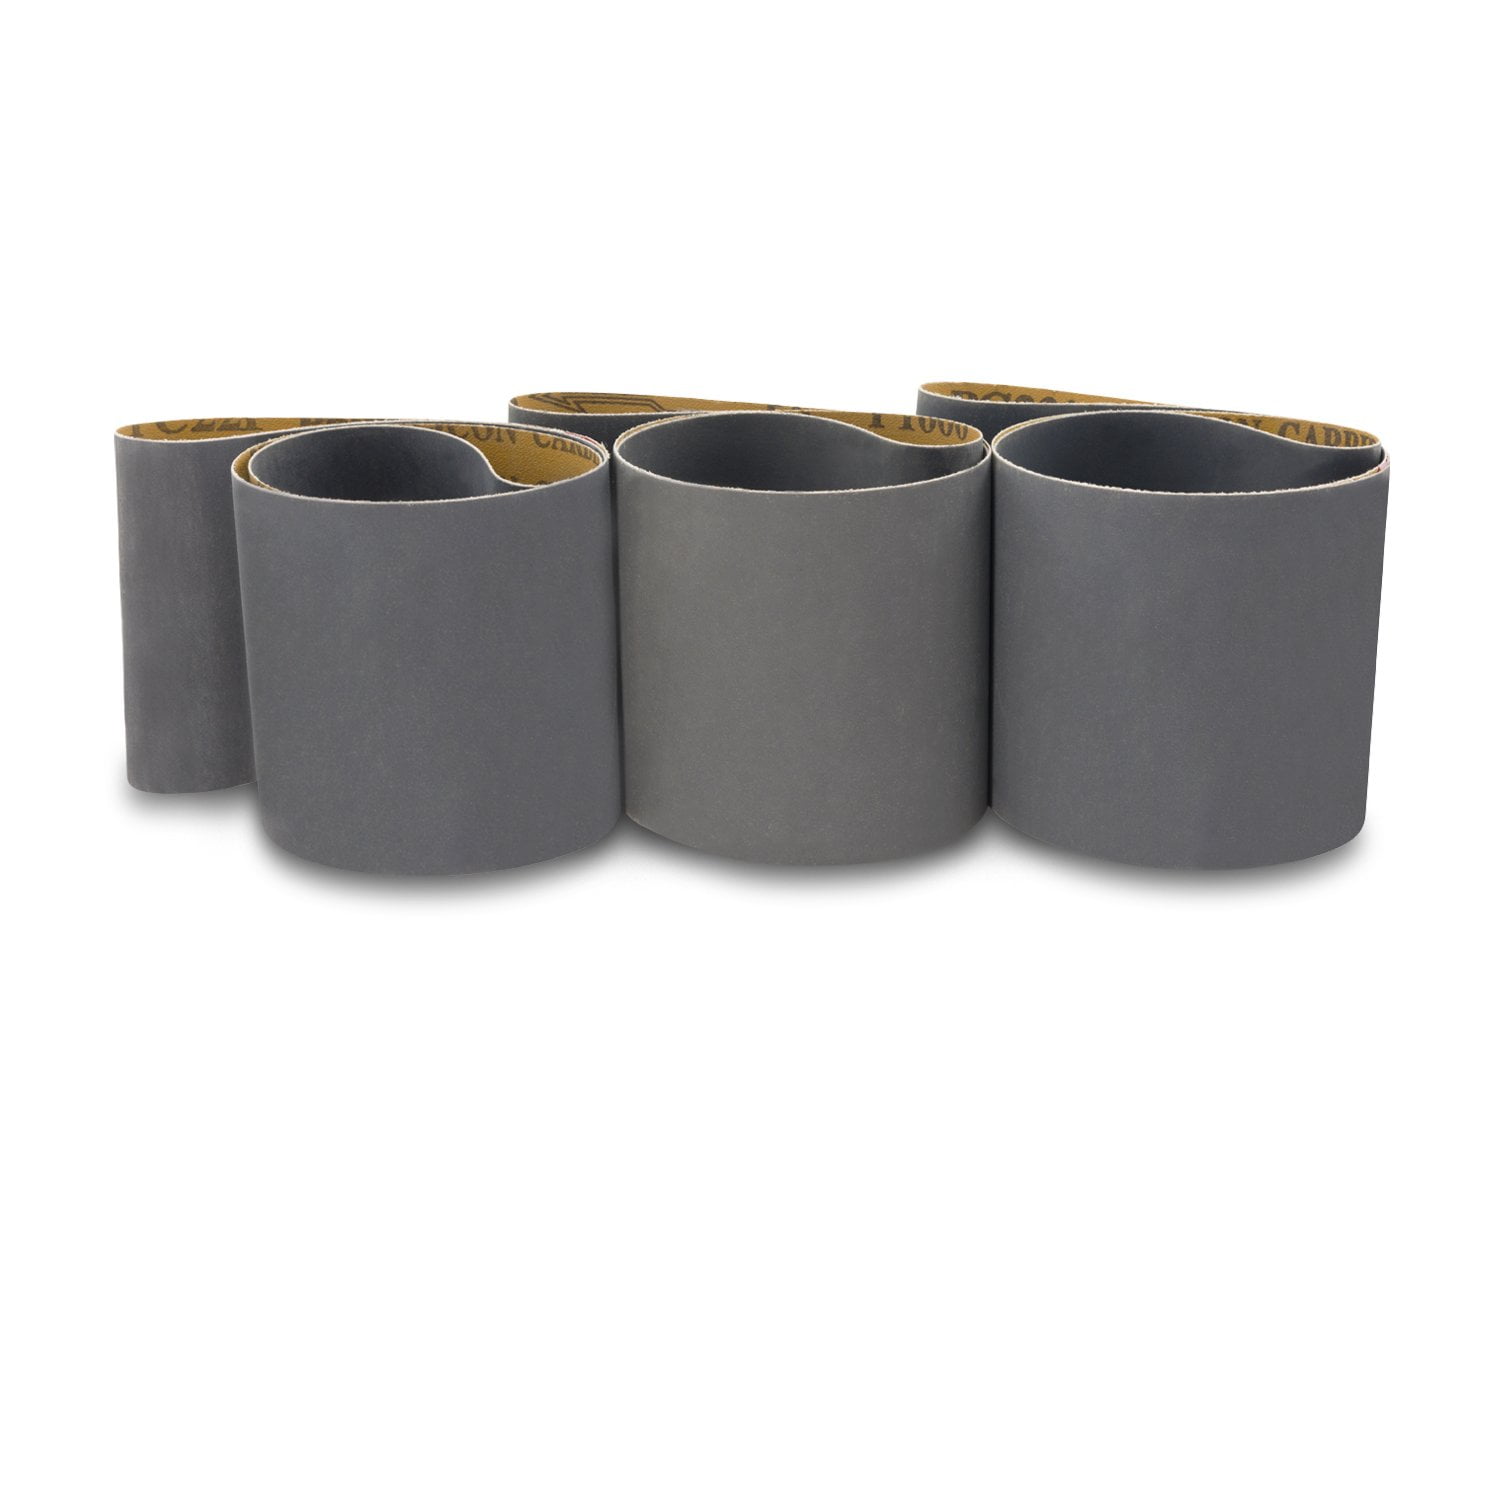 y-Weight Sanding Belts Silicon Carbide, 6x48 Silicon Carbide 50 Grit Sander Belt A&H Abrasives 159551 